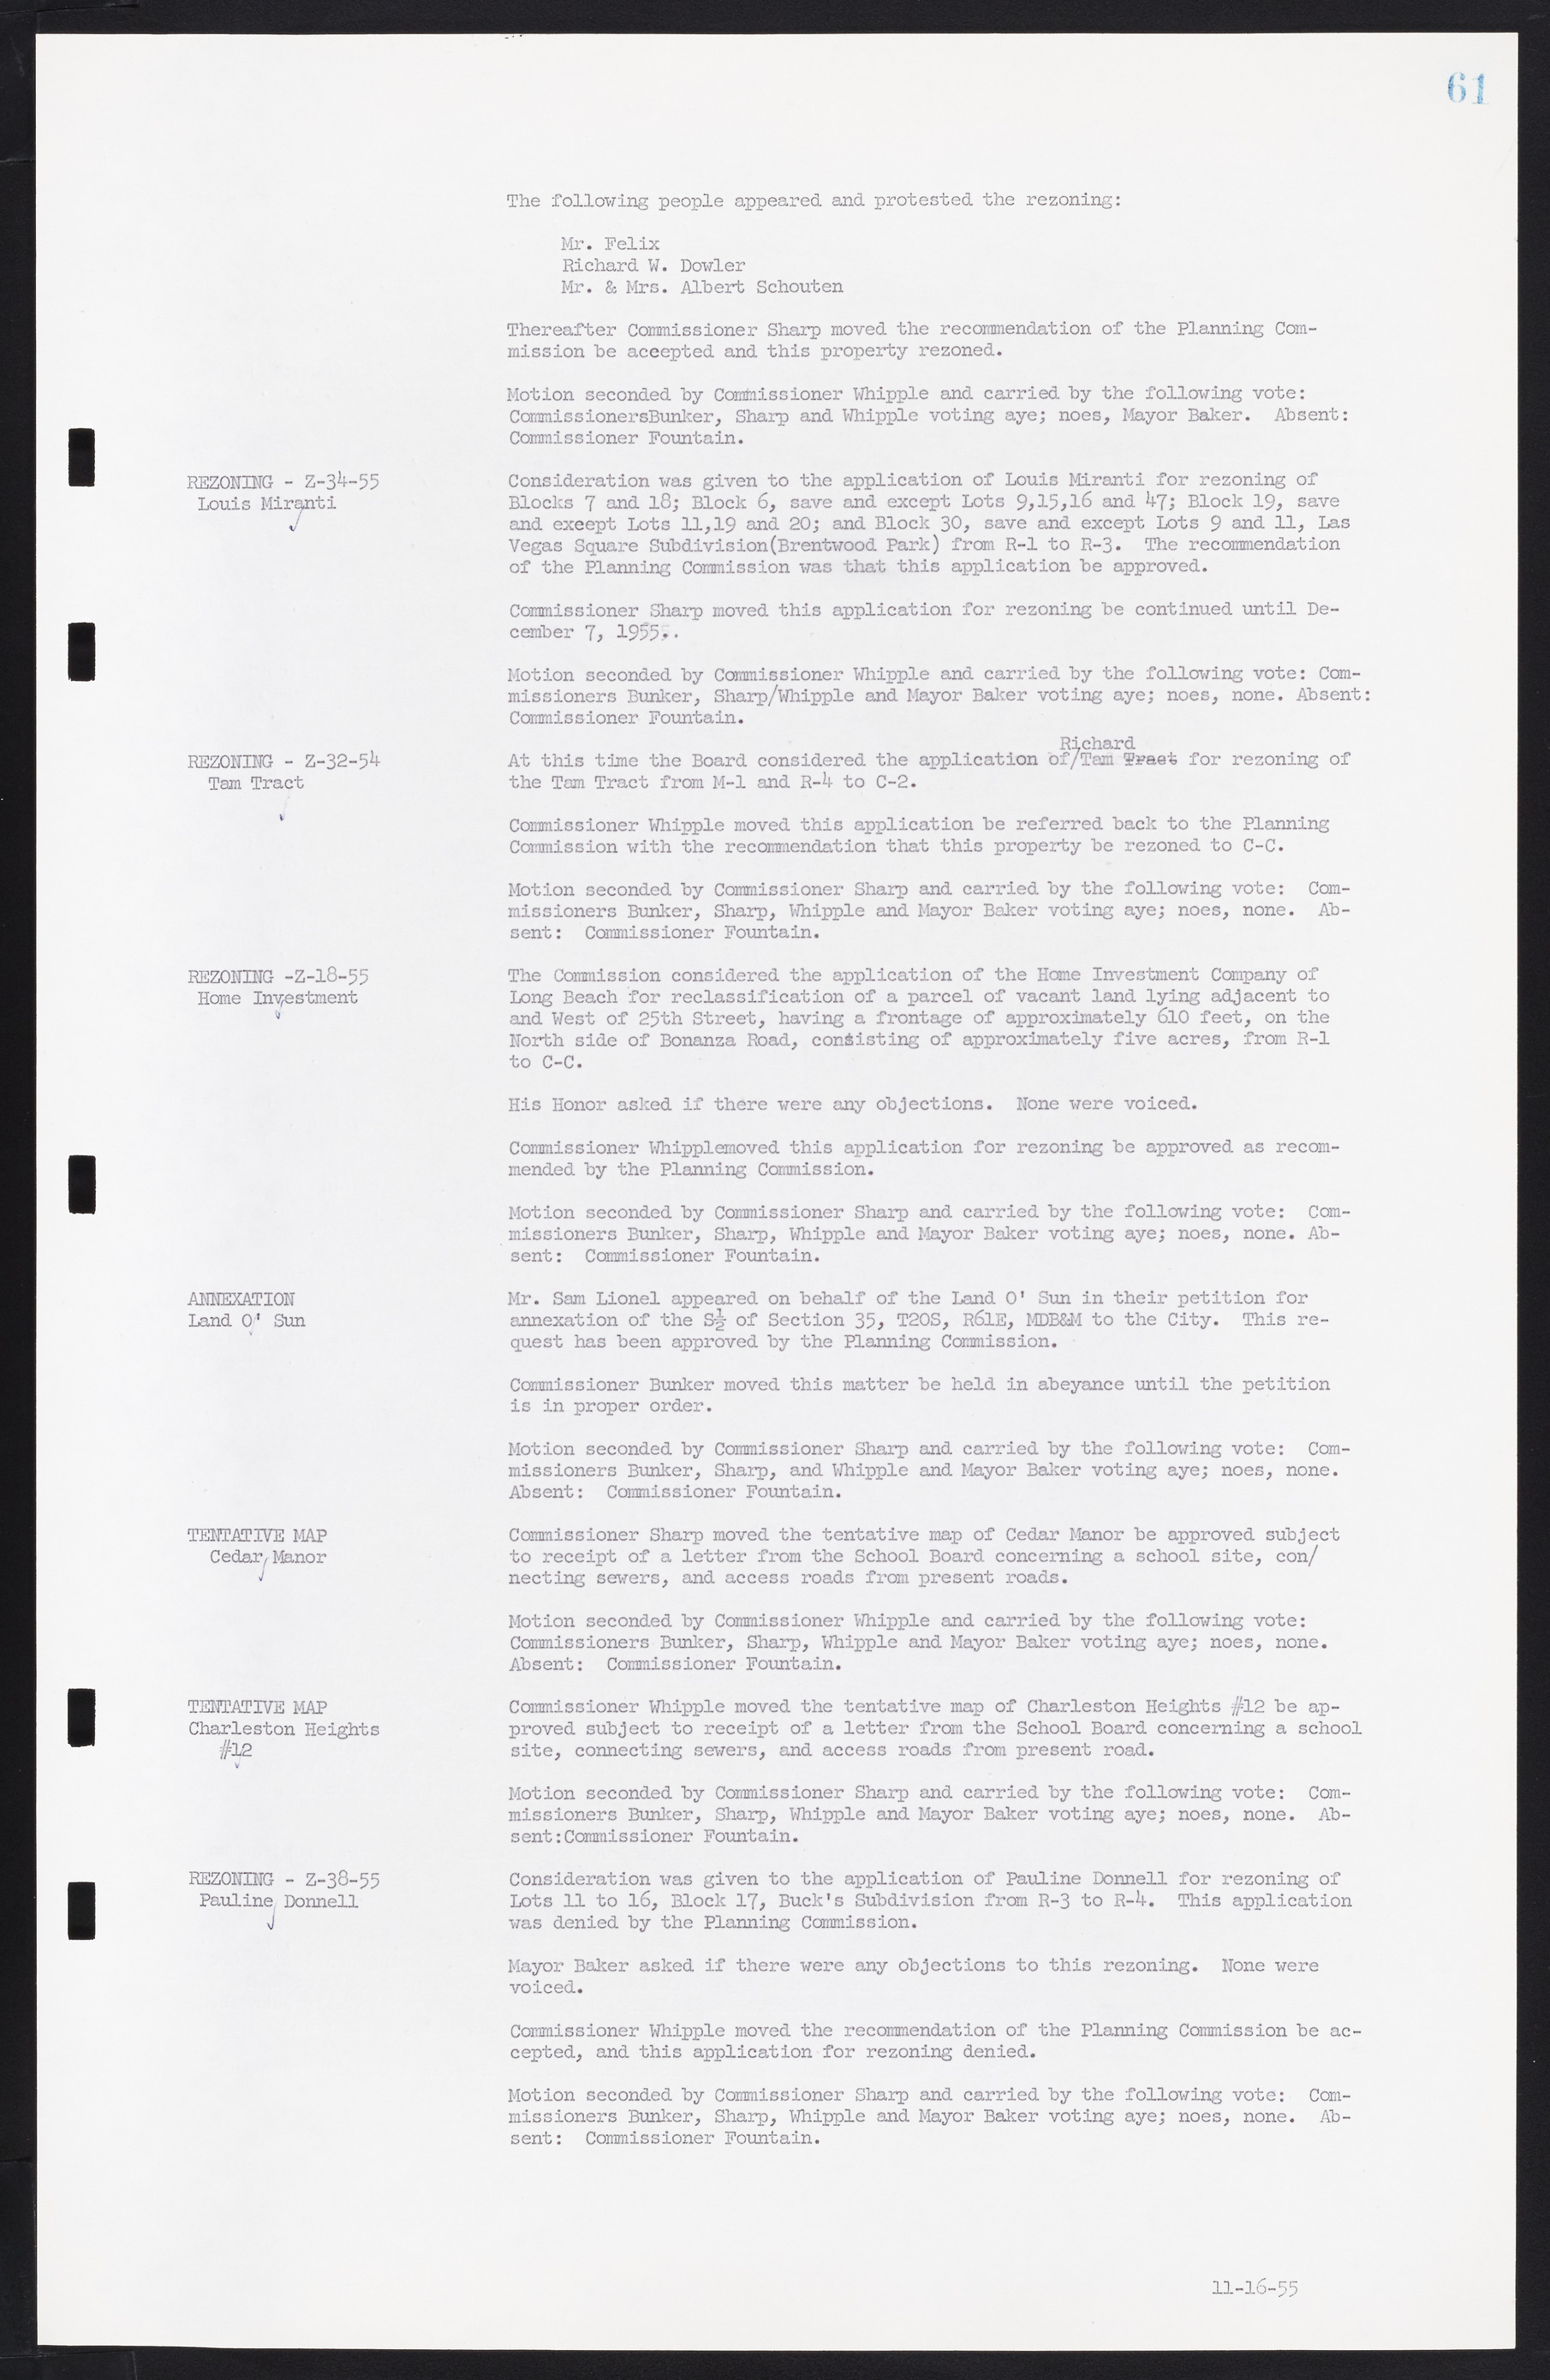 Las Vegas City Commission Minutes, September 21, 1955 to November 20, 1957, lvc000010-69